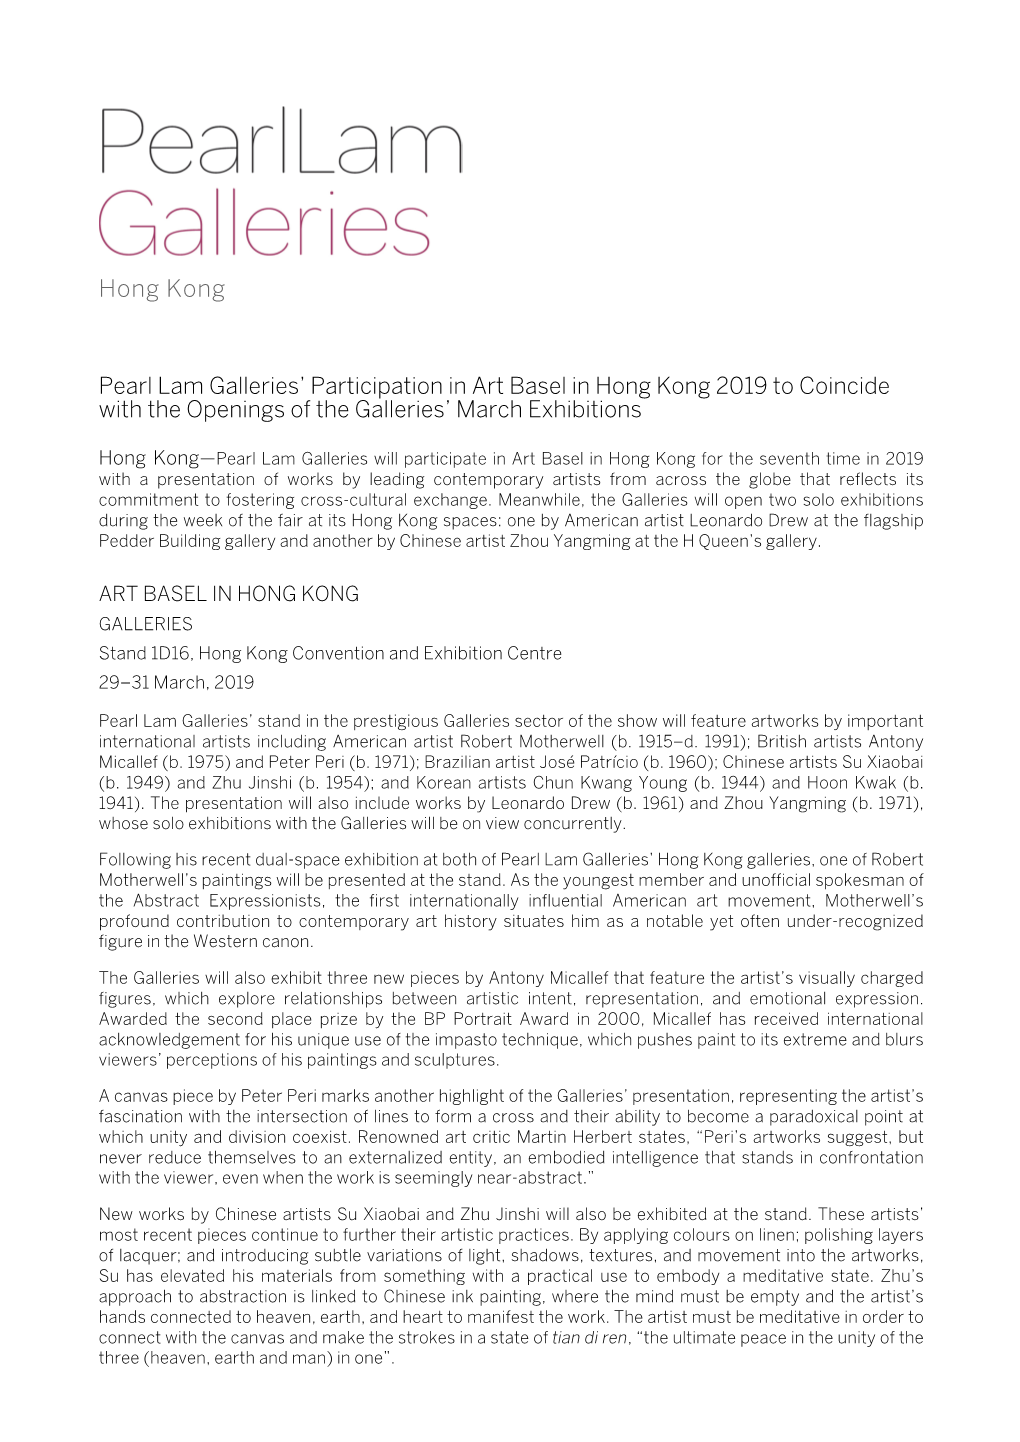 Hong Kong Pearl Lam Galleries' Participation in Art Basel in Hong